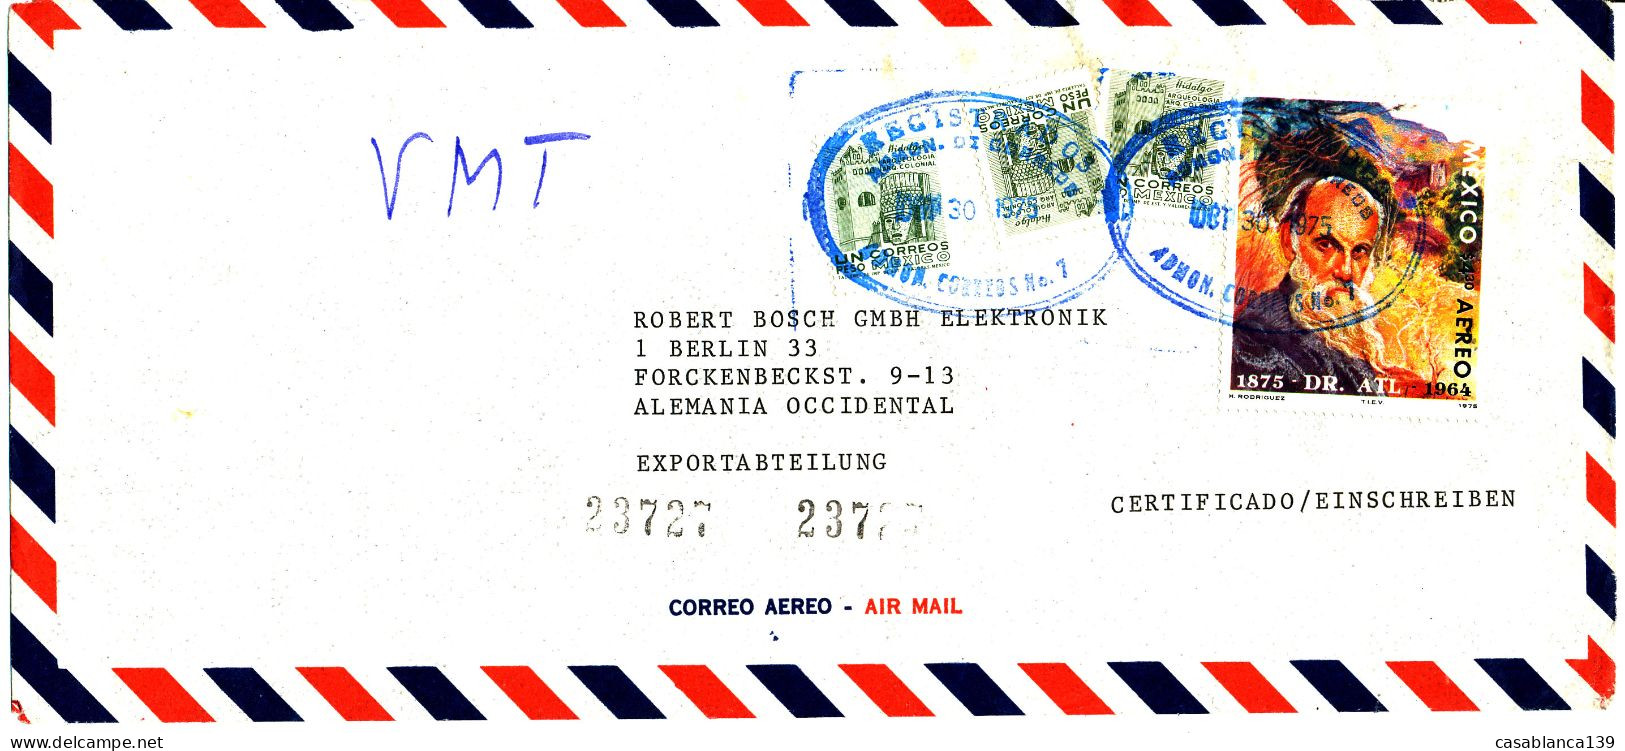 Paraguay, 1986, Dürer 400 Years, UNO, Airport, Attractive Letter - Paraguay